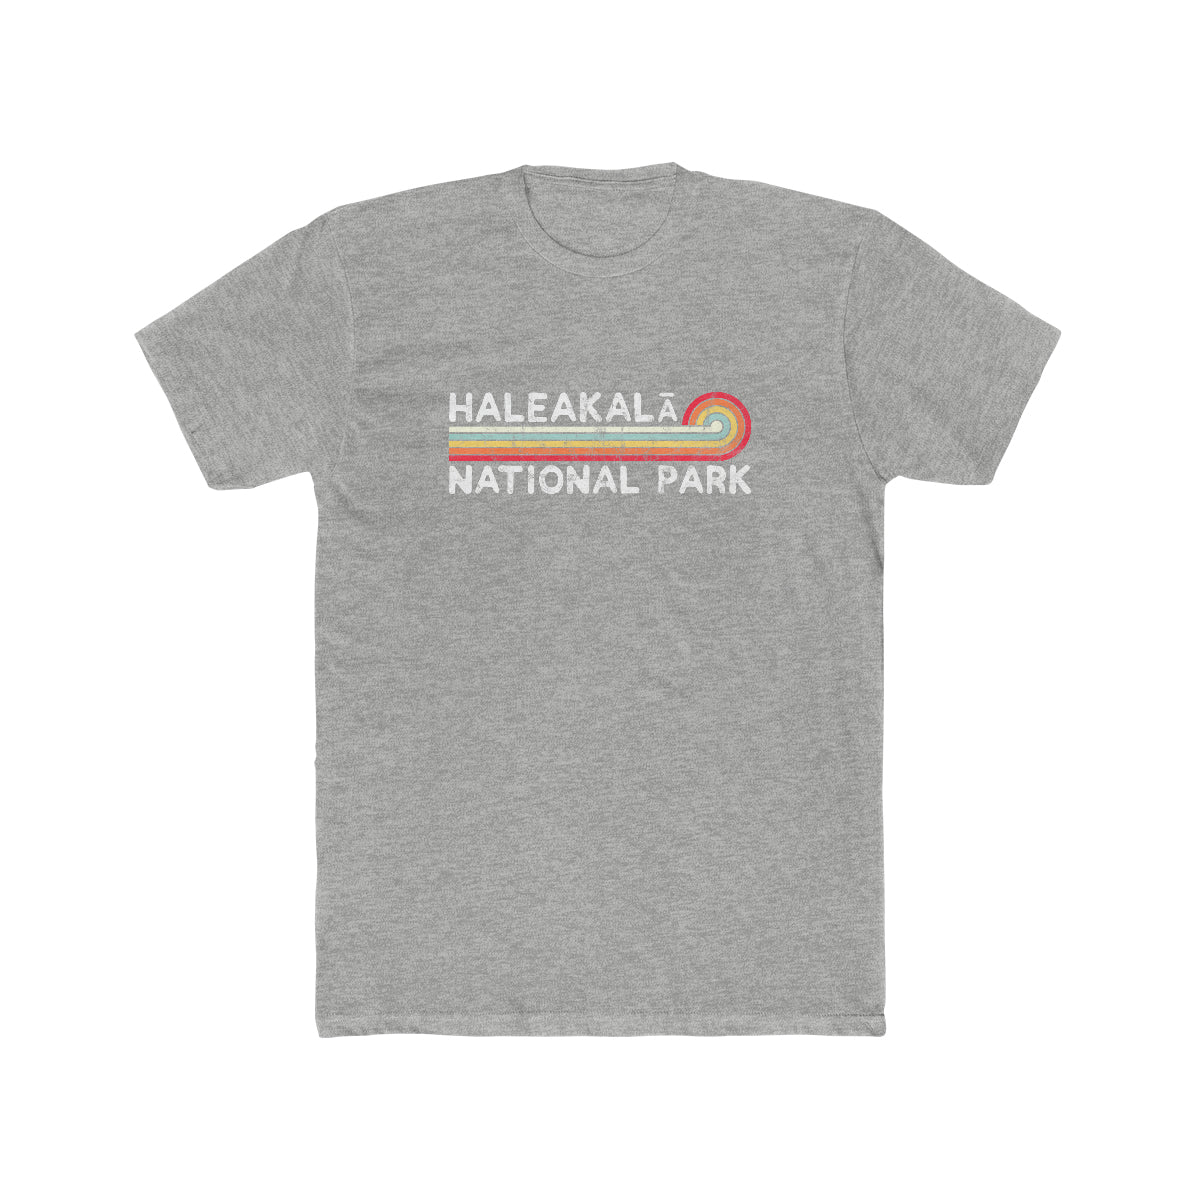 Haleakala National Park T-Shirt - Vintage Stretched Sunrise